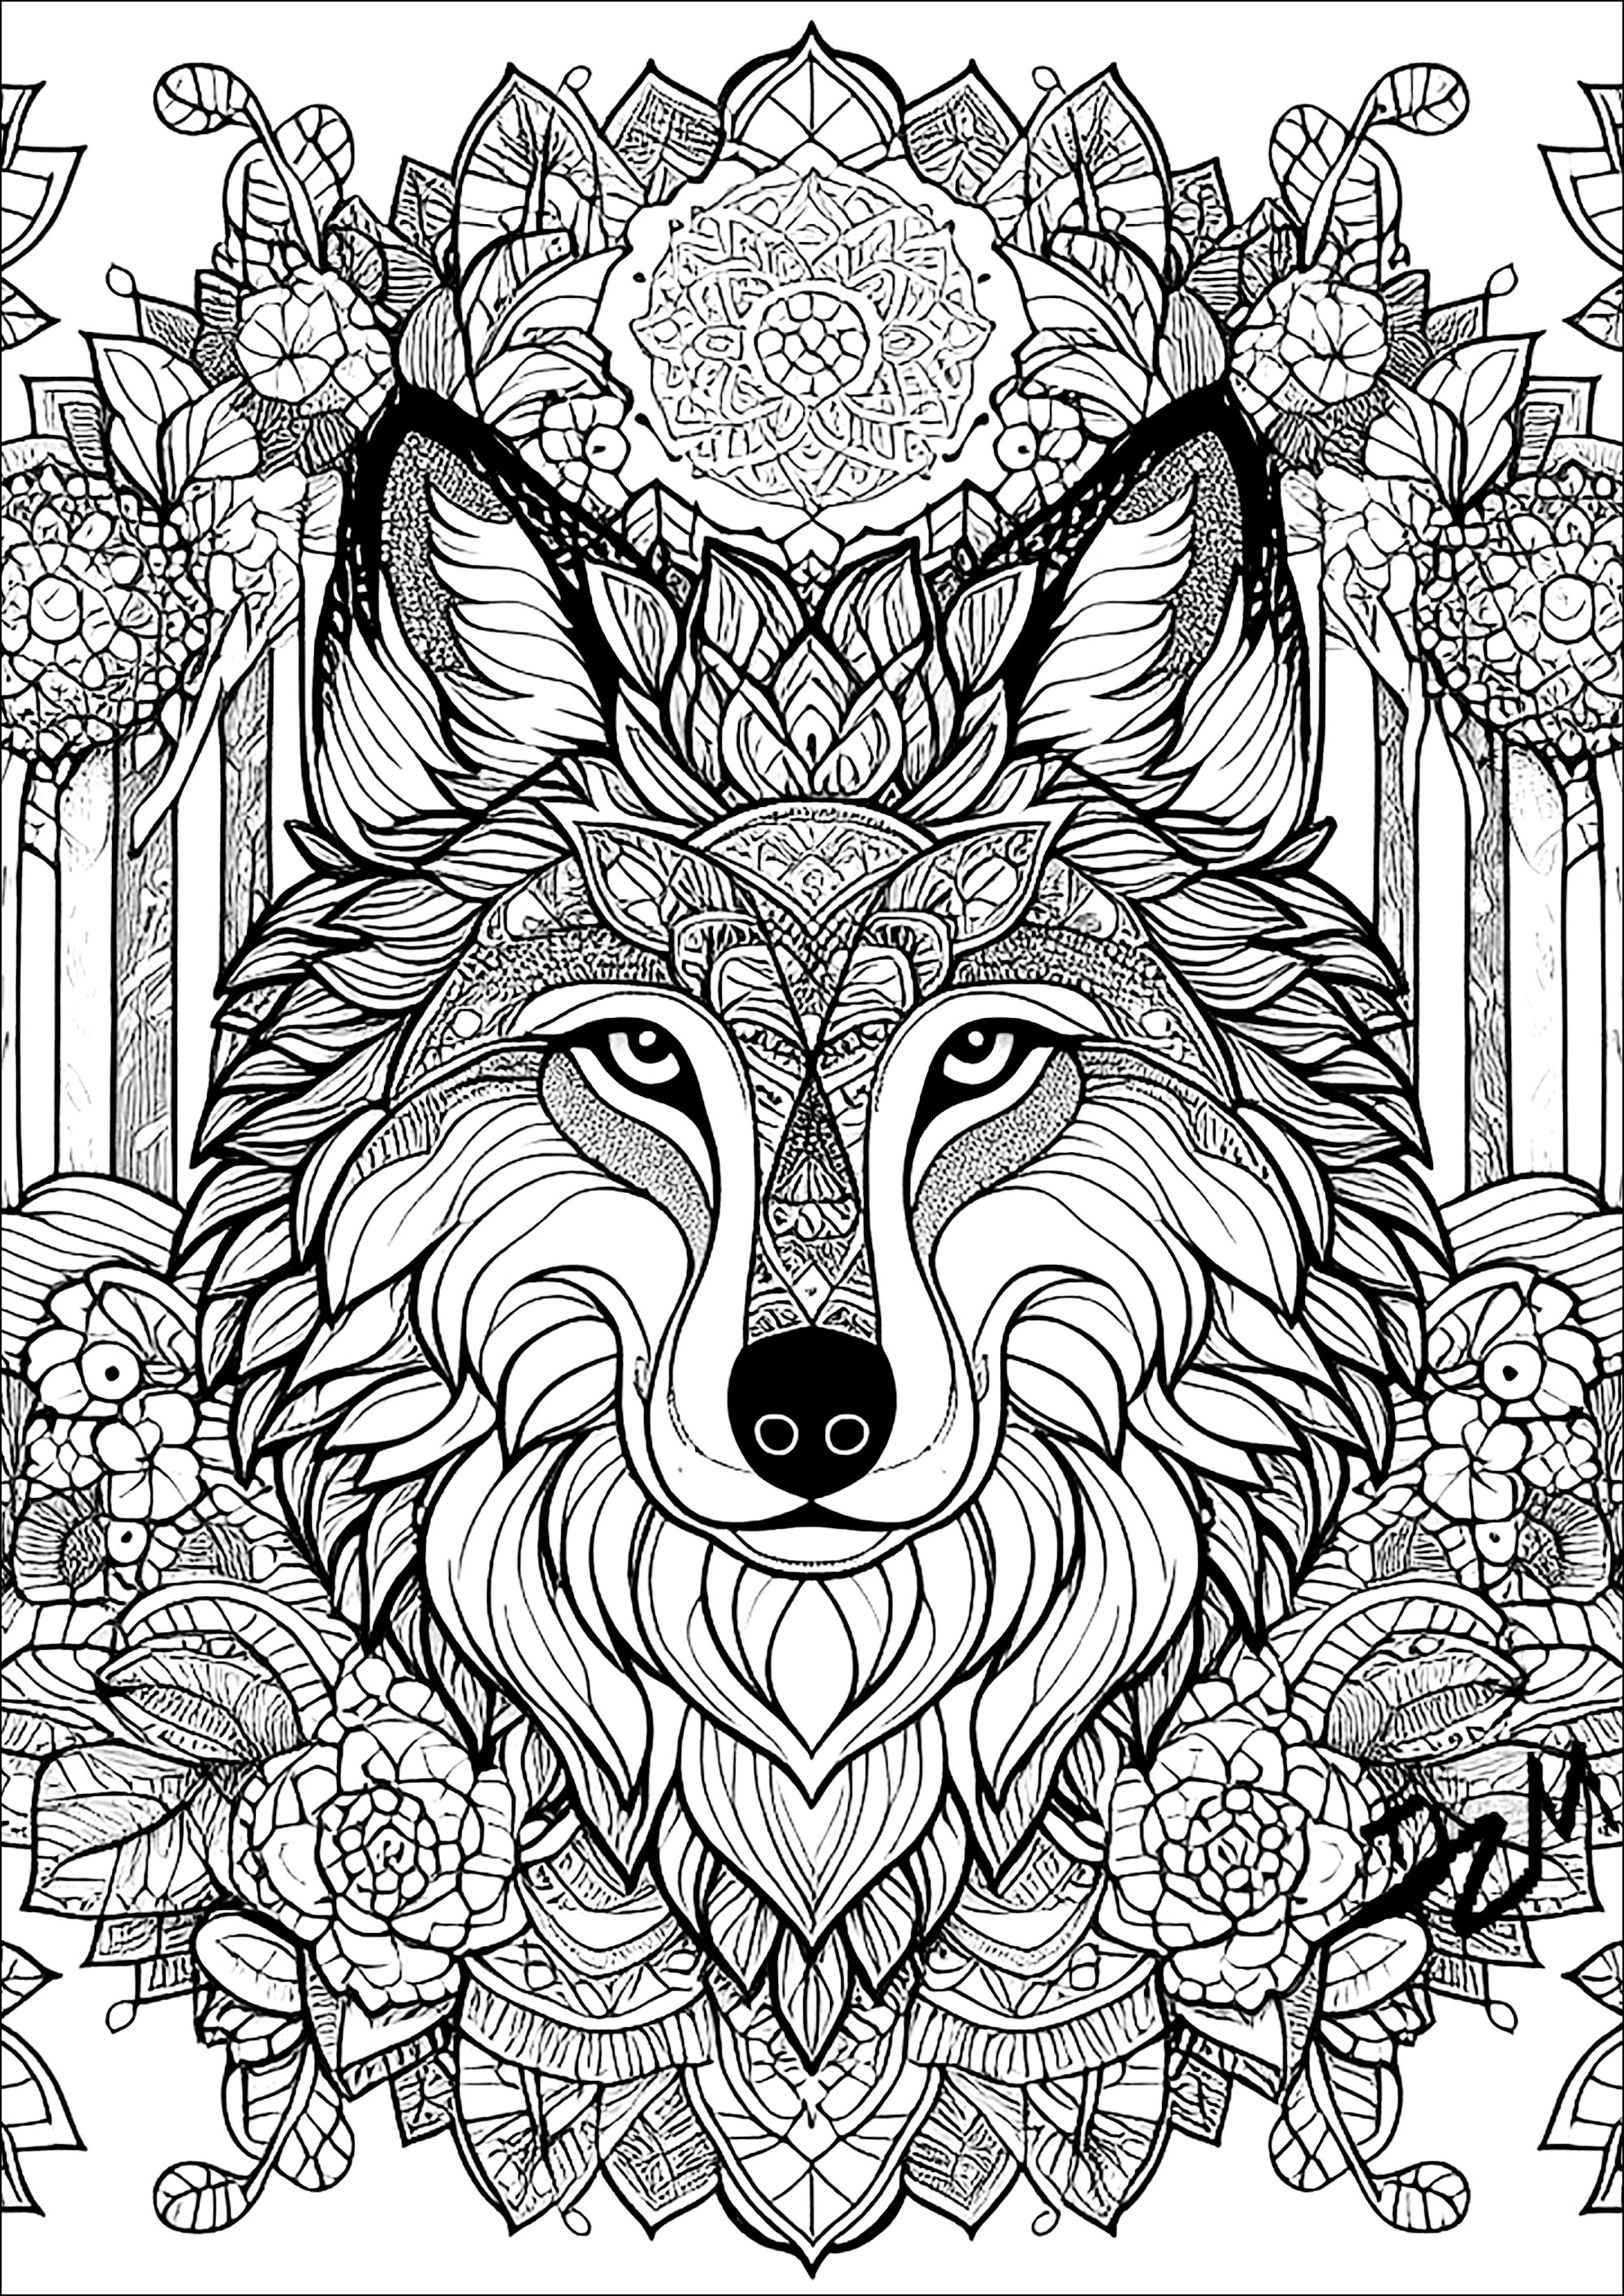 Wolf and mandalas, Artist : Domandalas